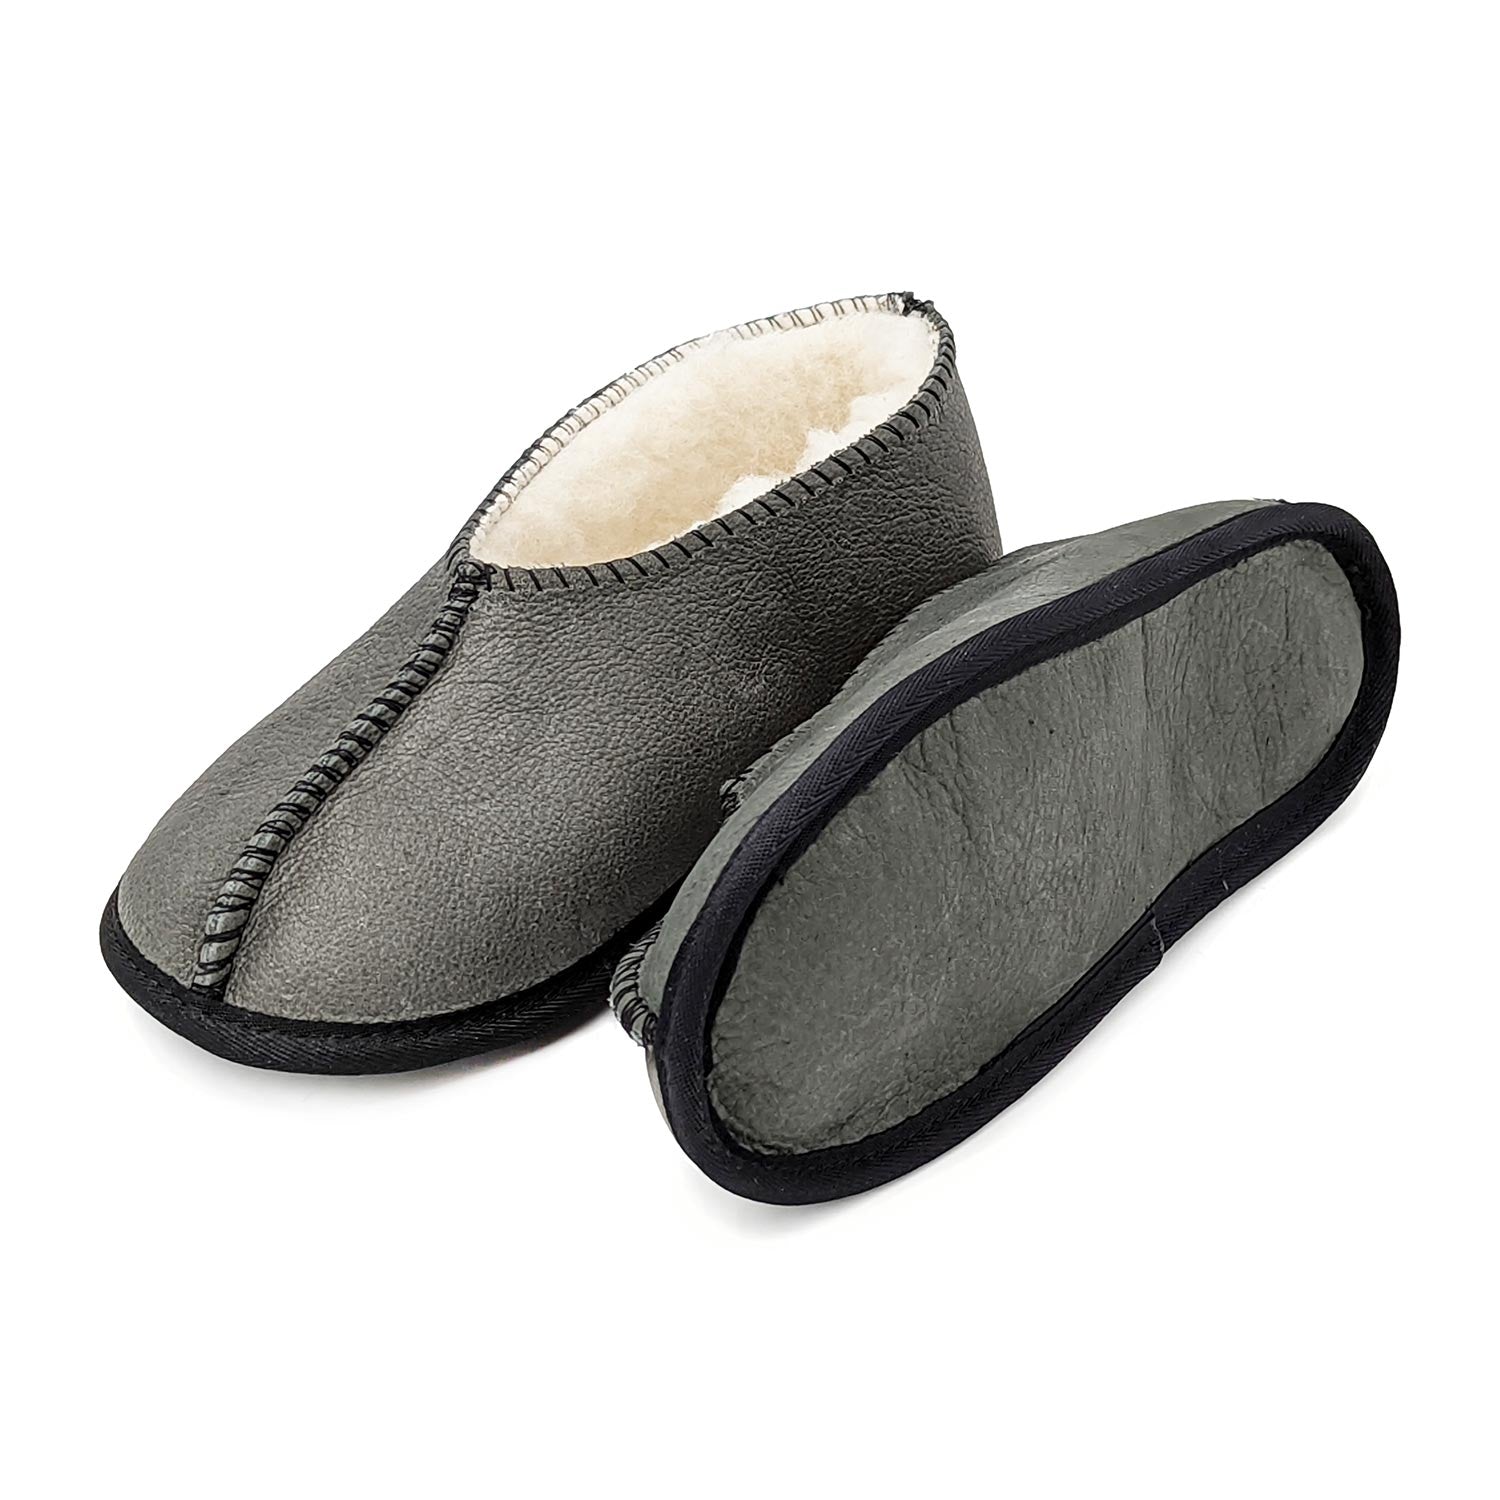 Karu Schloffy Charcoal Leather & Wool Soft Sole Slippers Slippers Karu Slippers